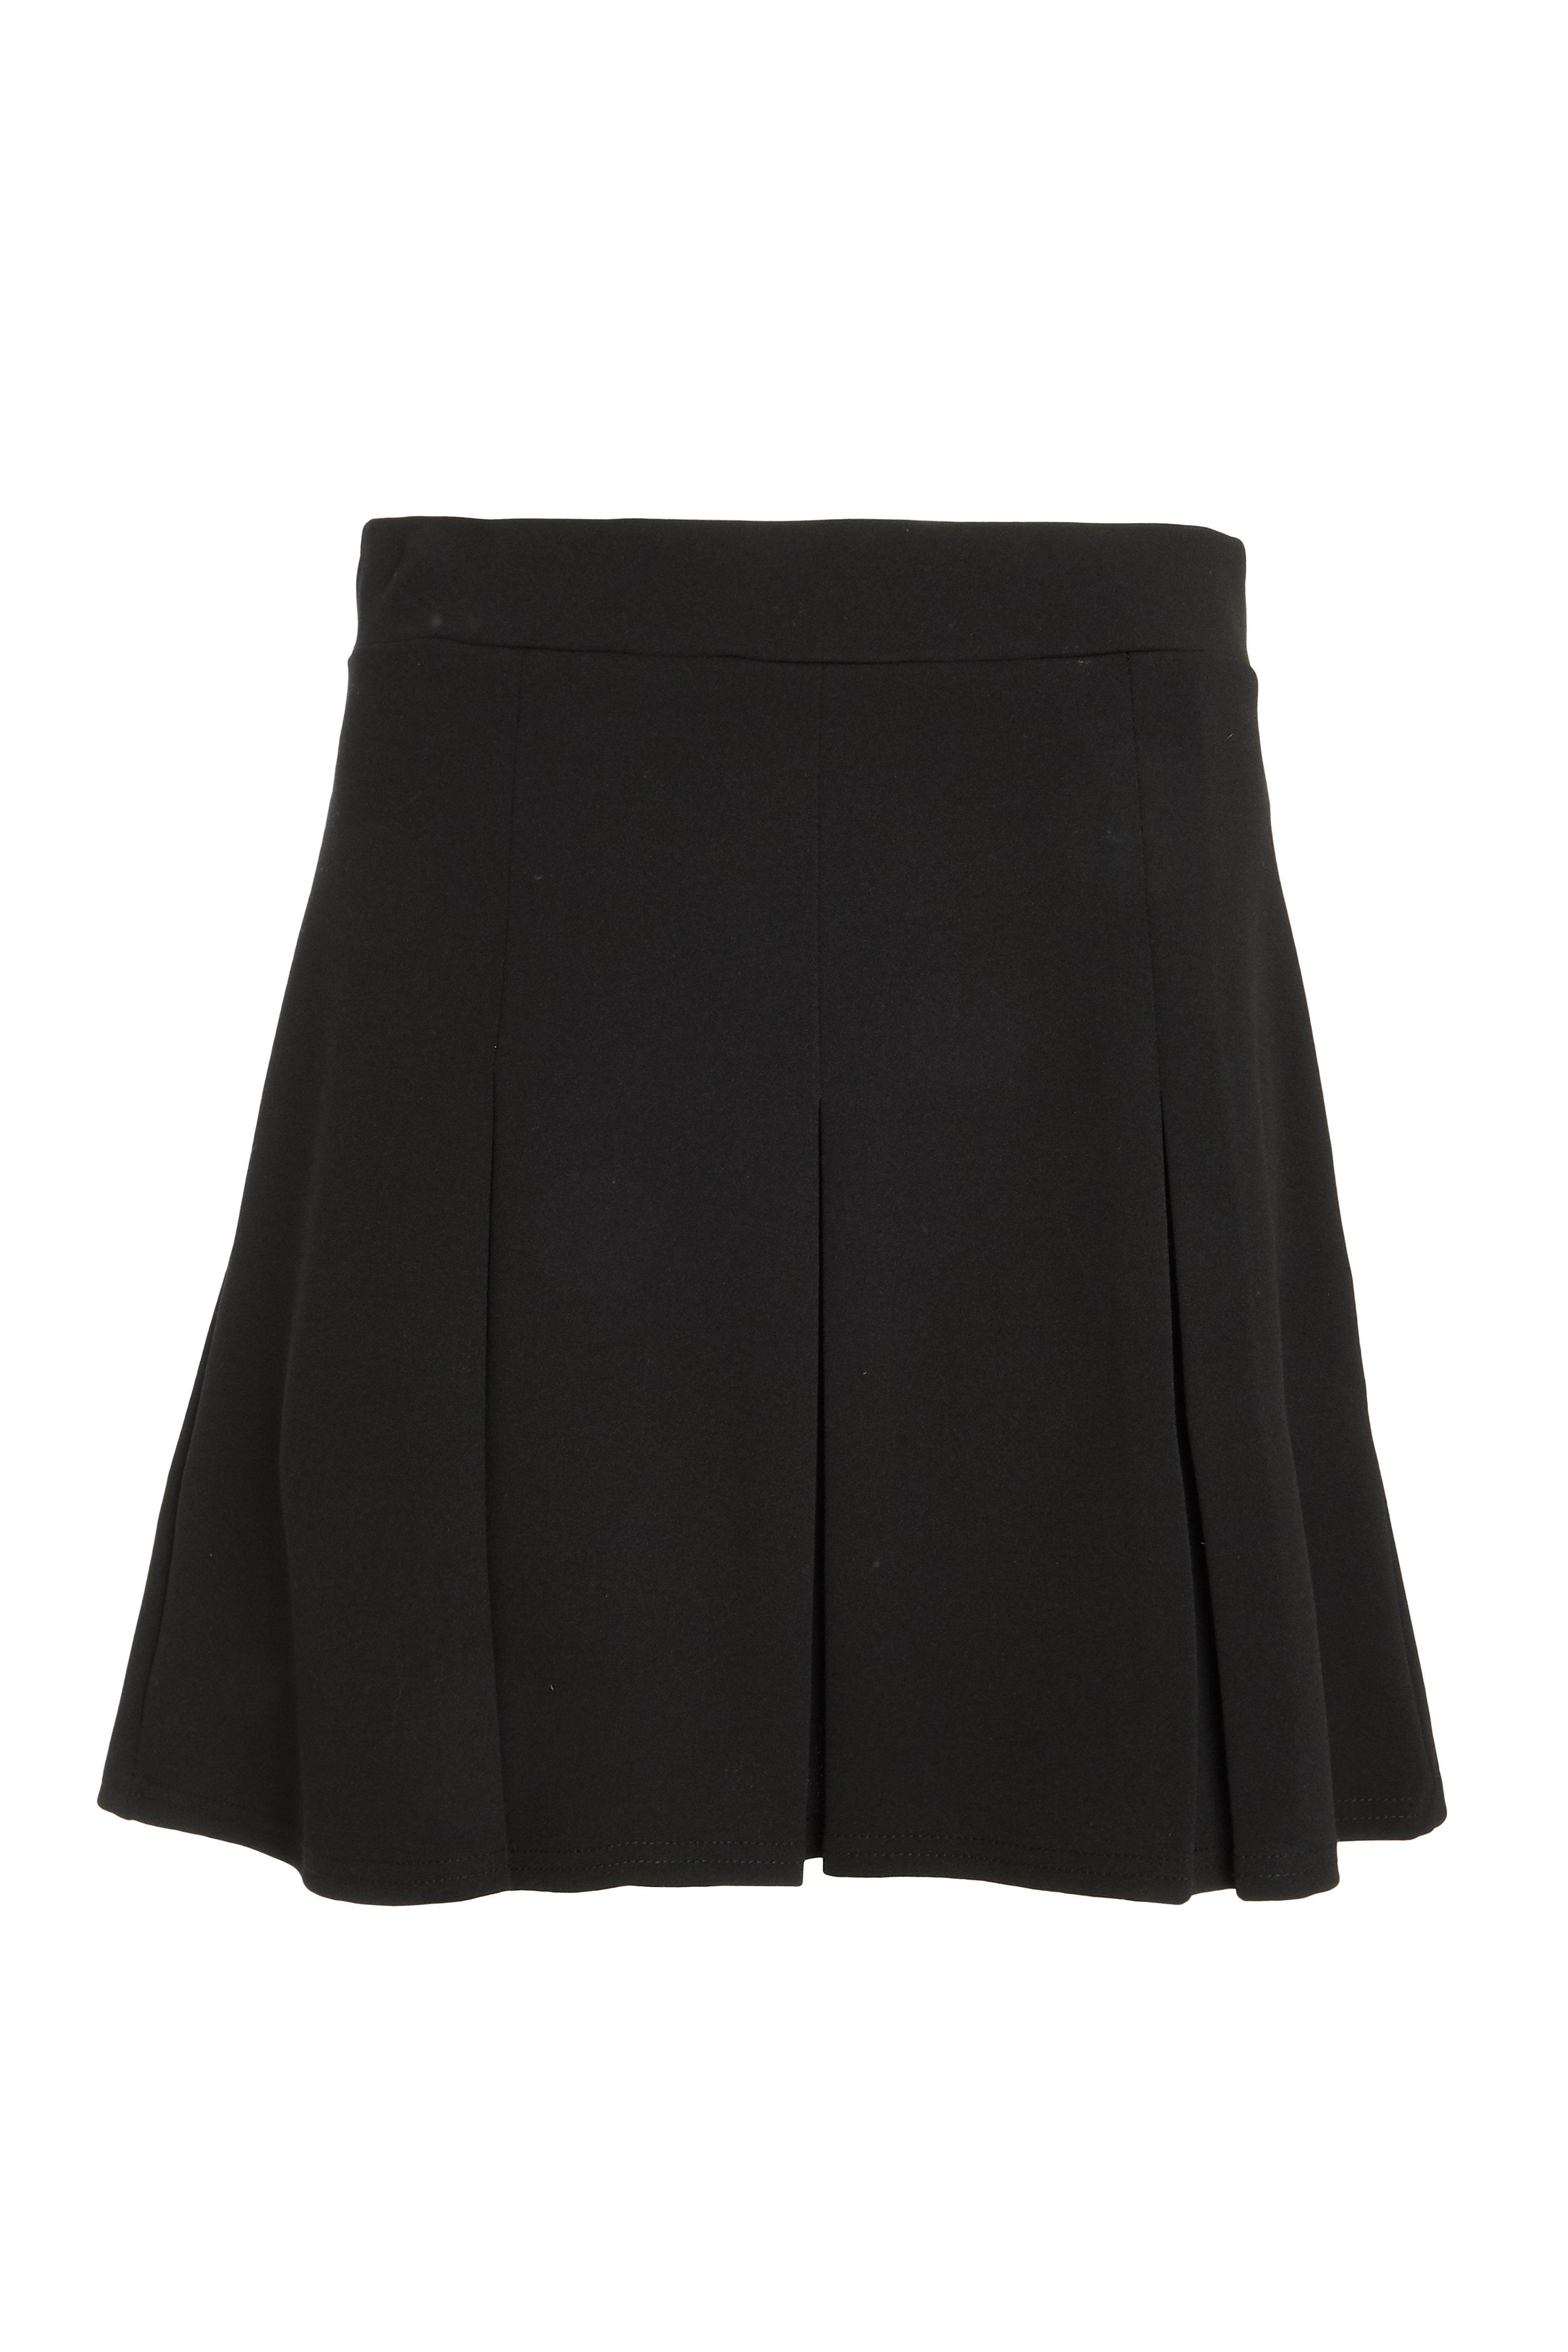 Black Pleated Skirt - Quiz Clothing